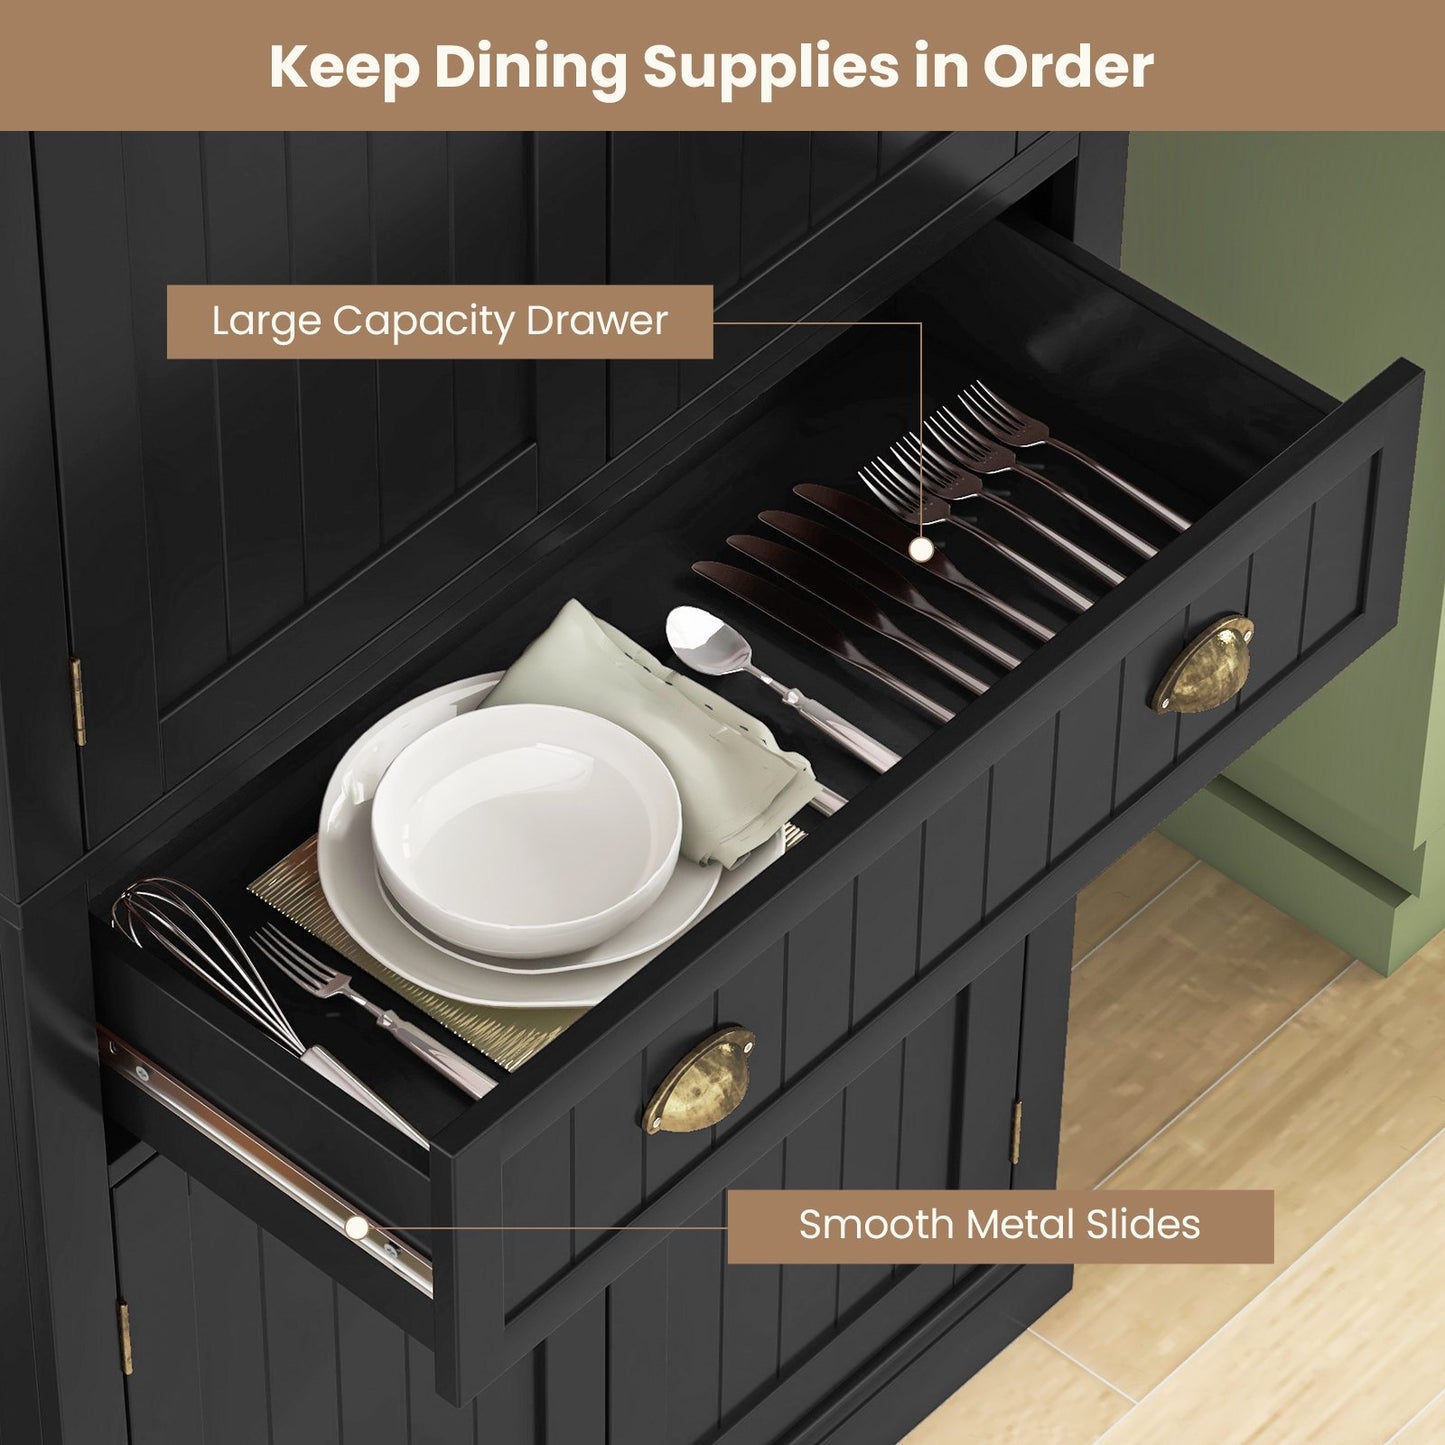 Cupboard Freestanding Kitchen Cabinet w/ Adjustable Shelves, Black